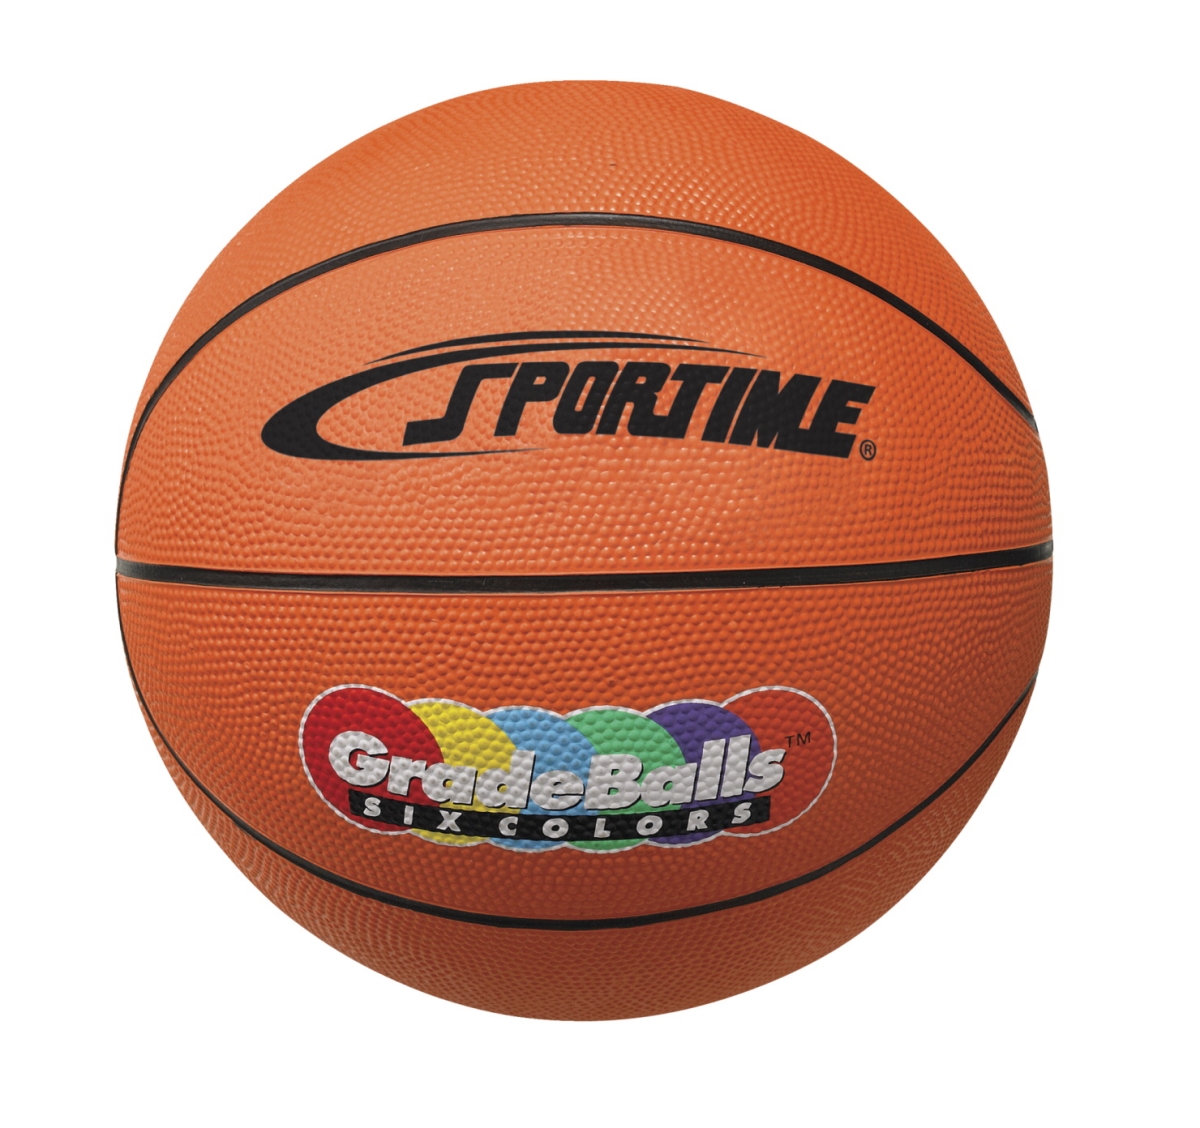 Picture of Sportime 1599265 27 in. Gradeball Rubber Junior Basketball, Orange